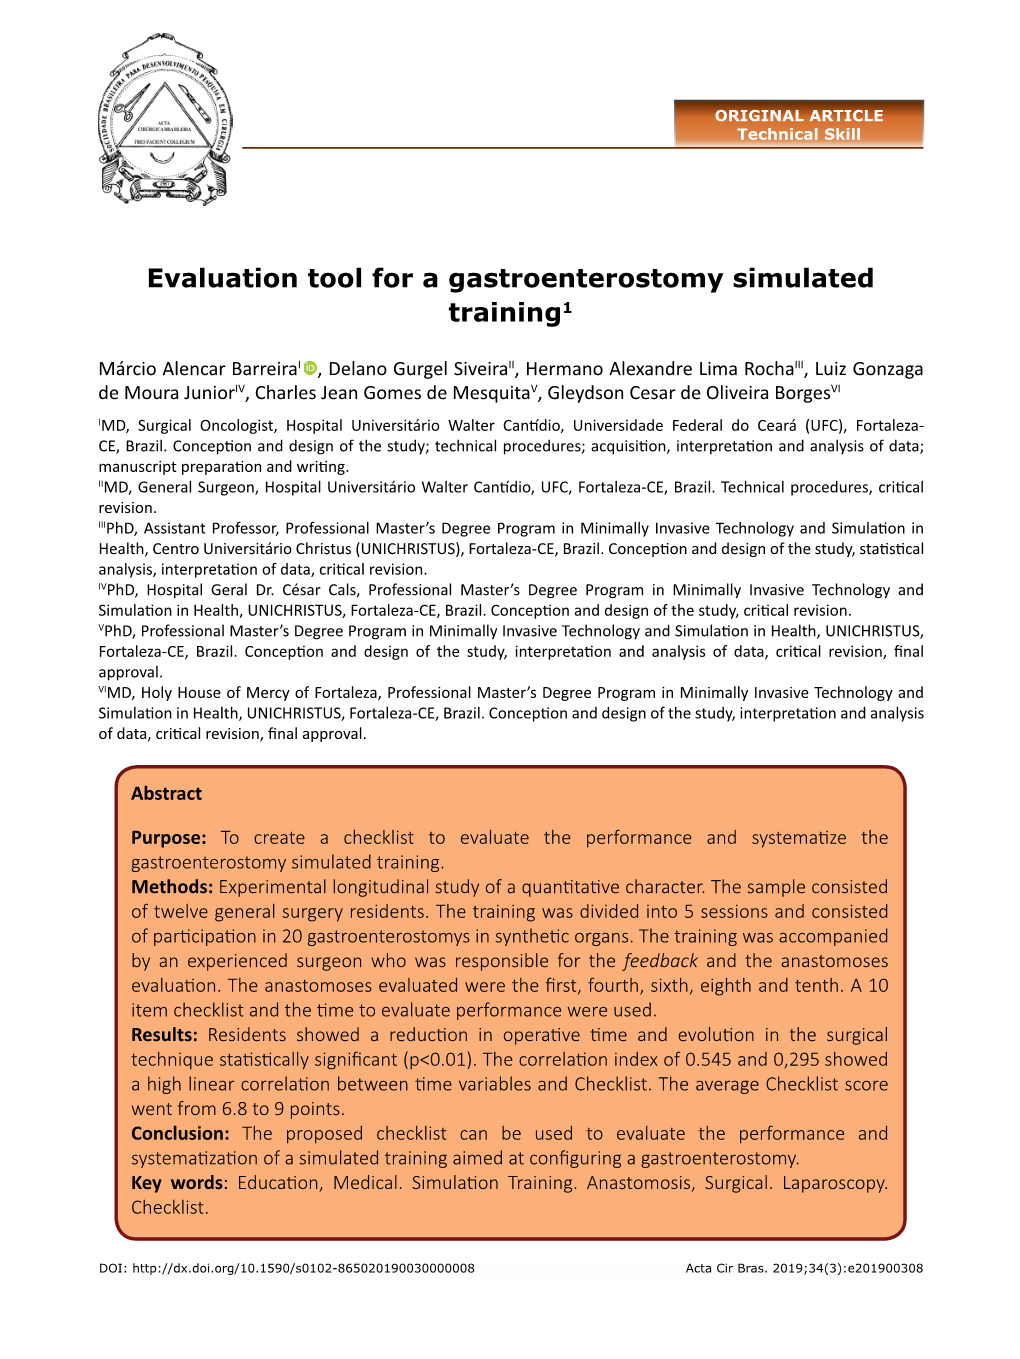 Evaluation Tool for a Gastroenterostomy Simulated Training1